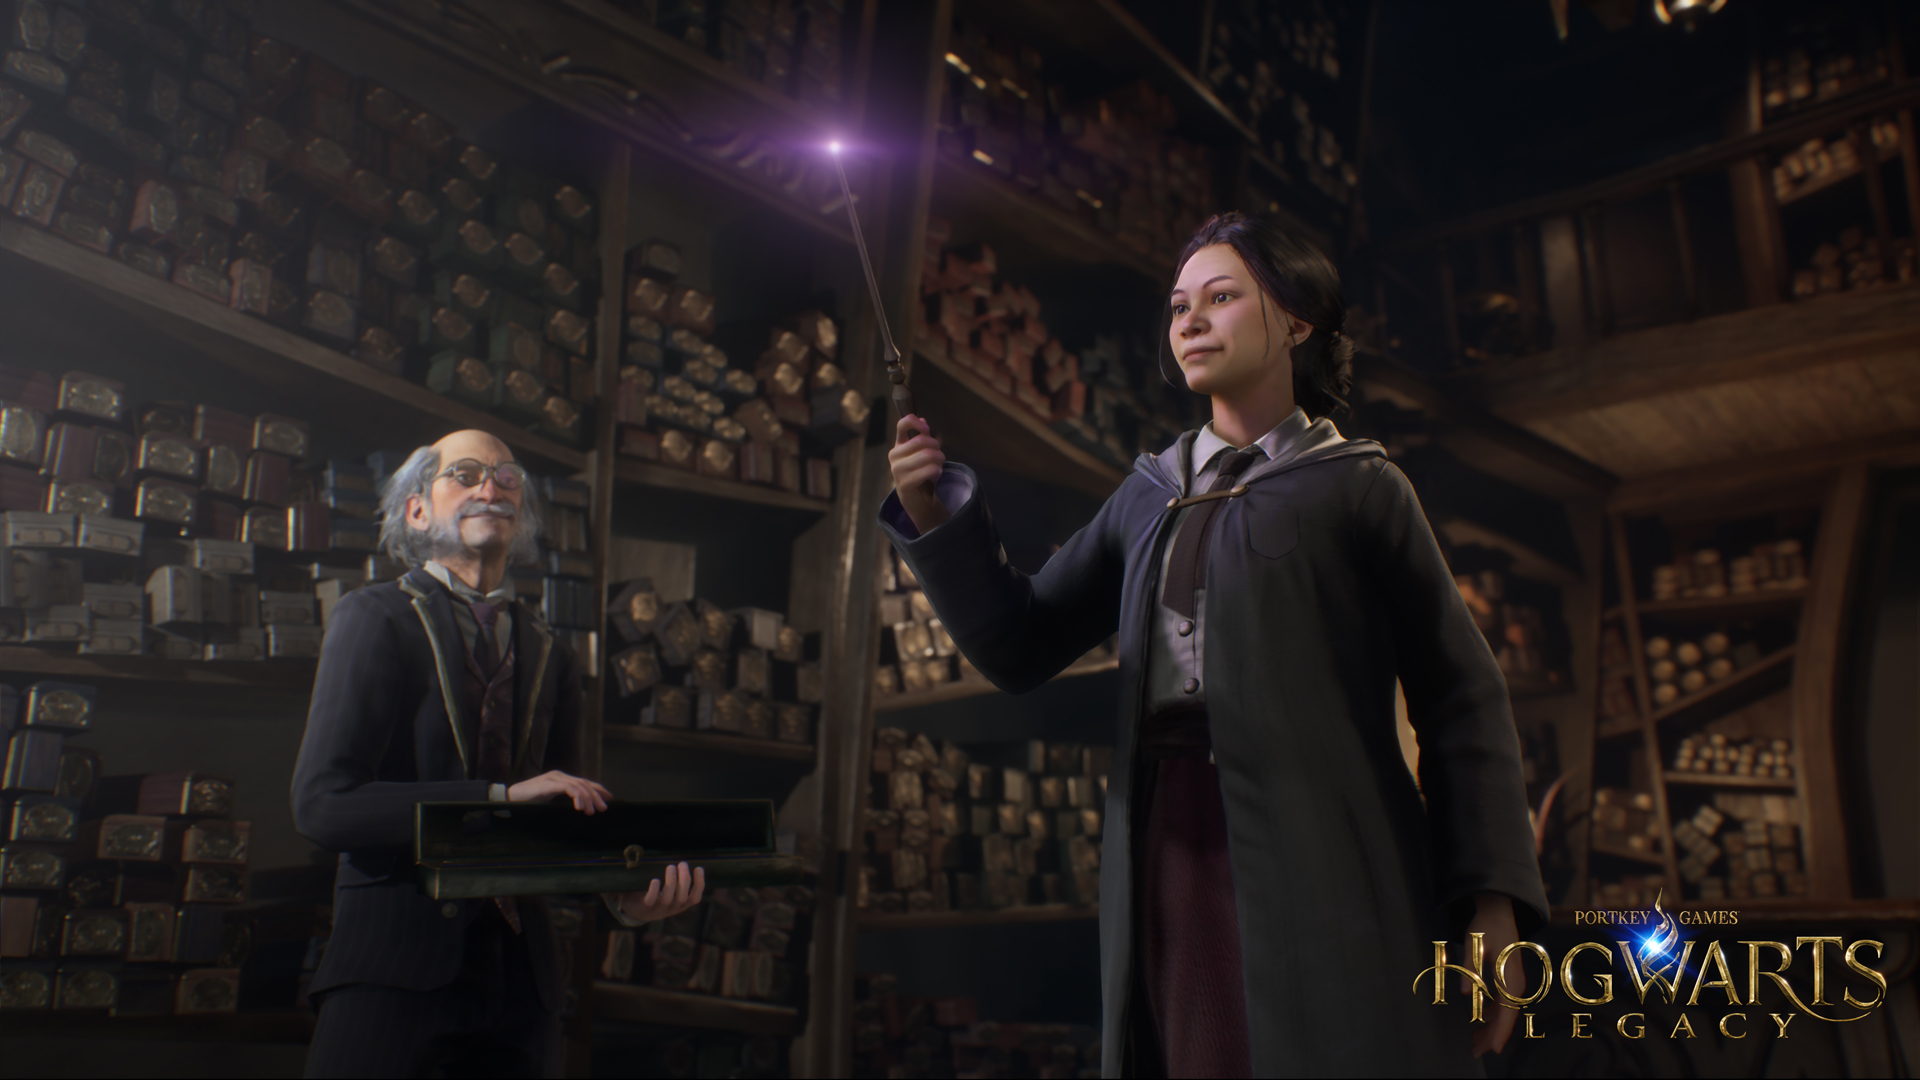 'Hogwarts Legacy' will hit Xbox, PlayStation and PC this holiday season